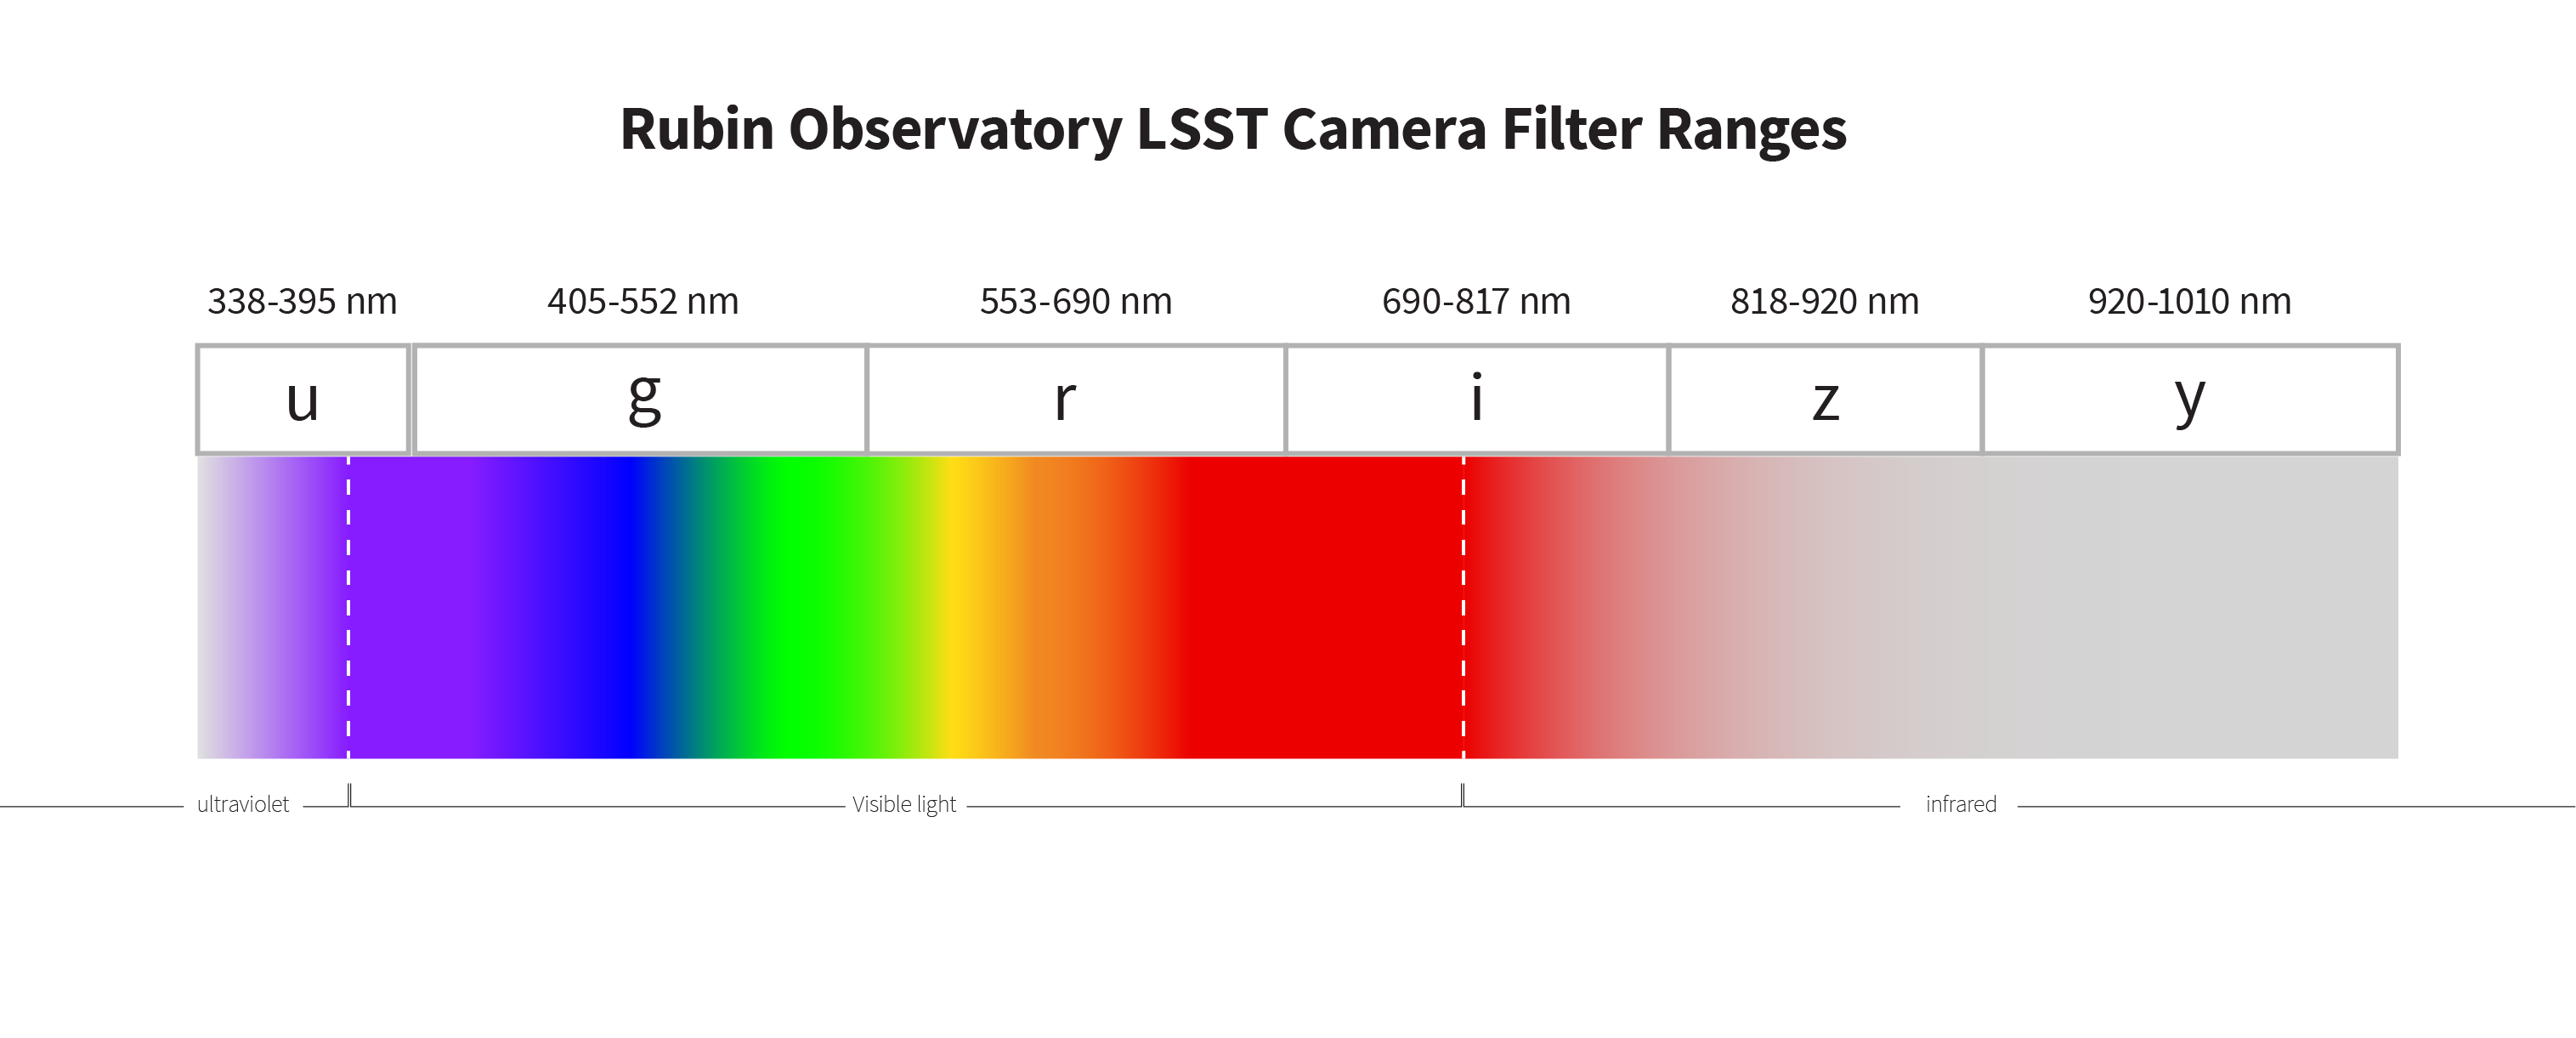 Wavelength Ranges of Visible Light